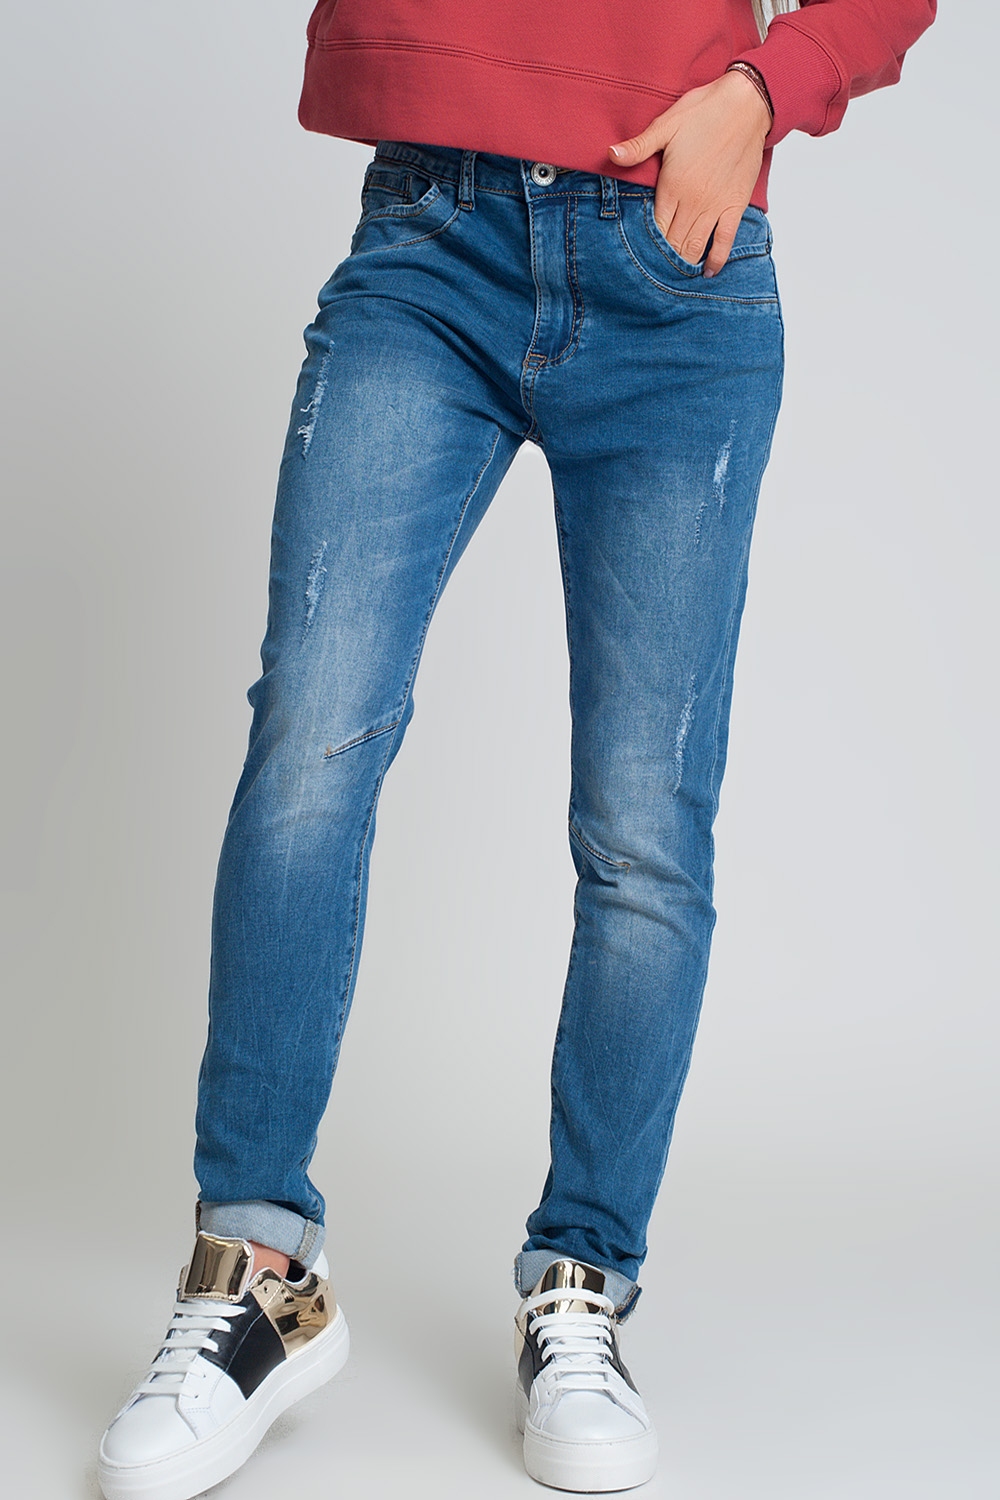 wholesale mom jeans